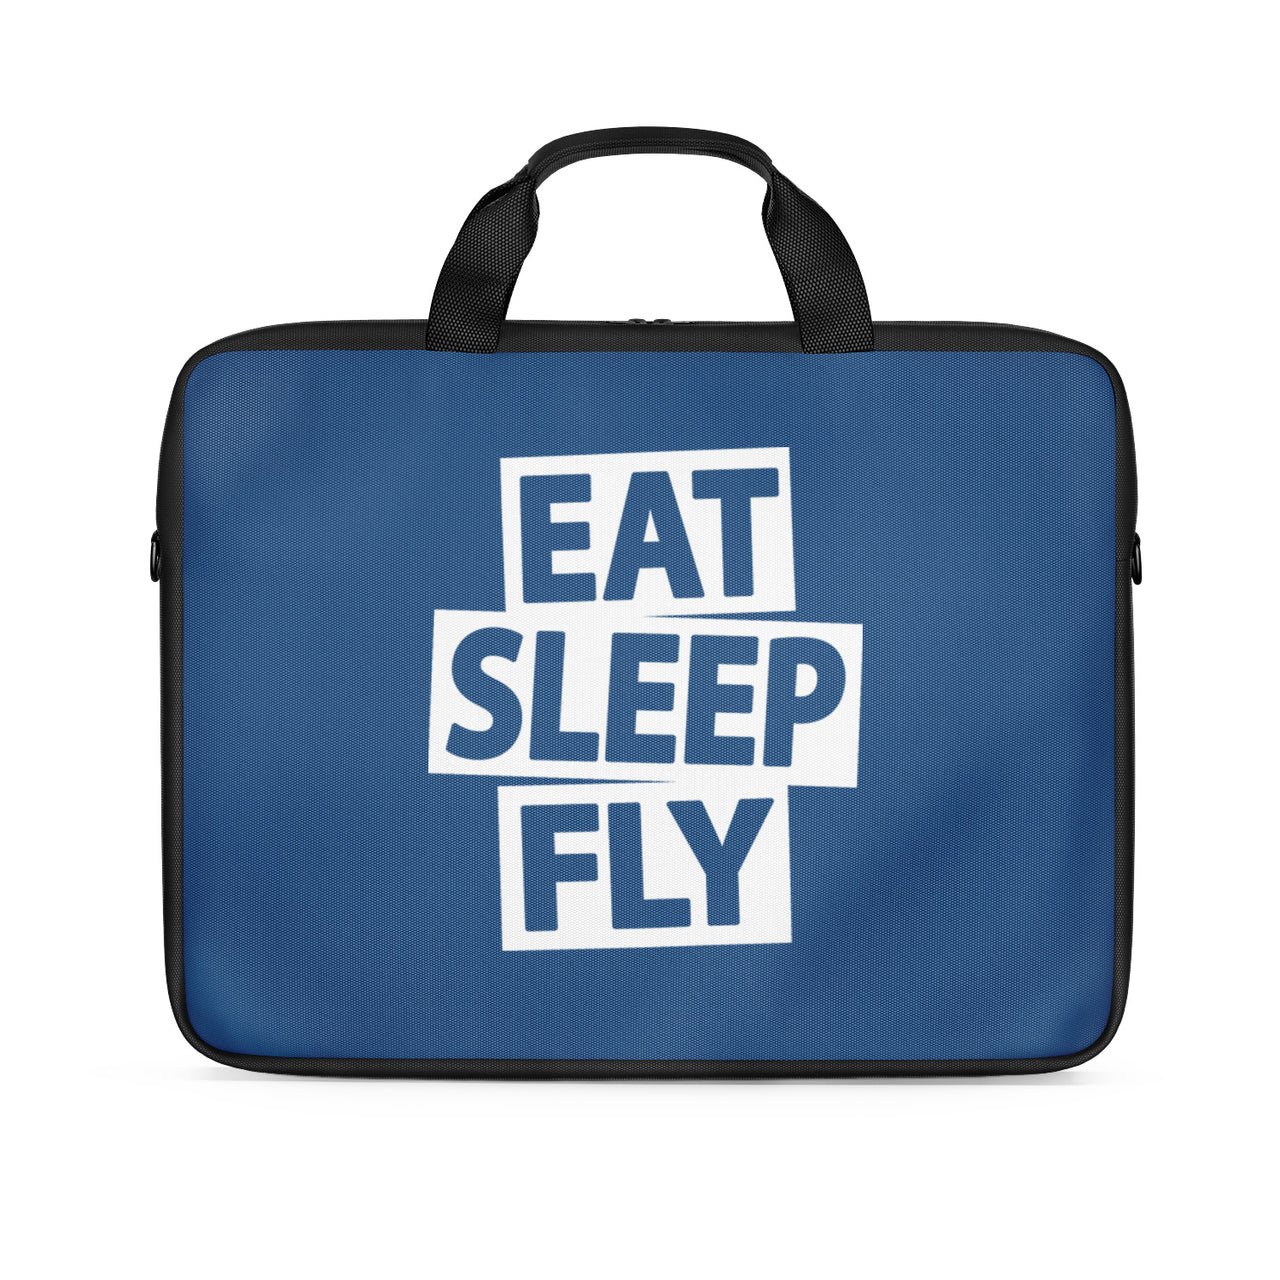 Eat Sleep Fly Designed Laptop & Tablet Bags